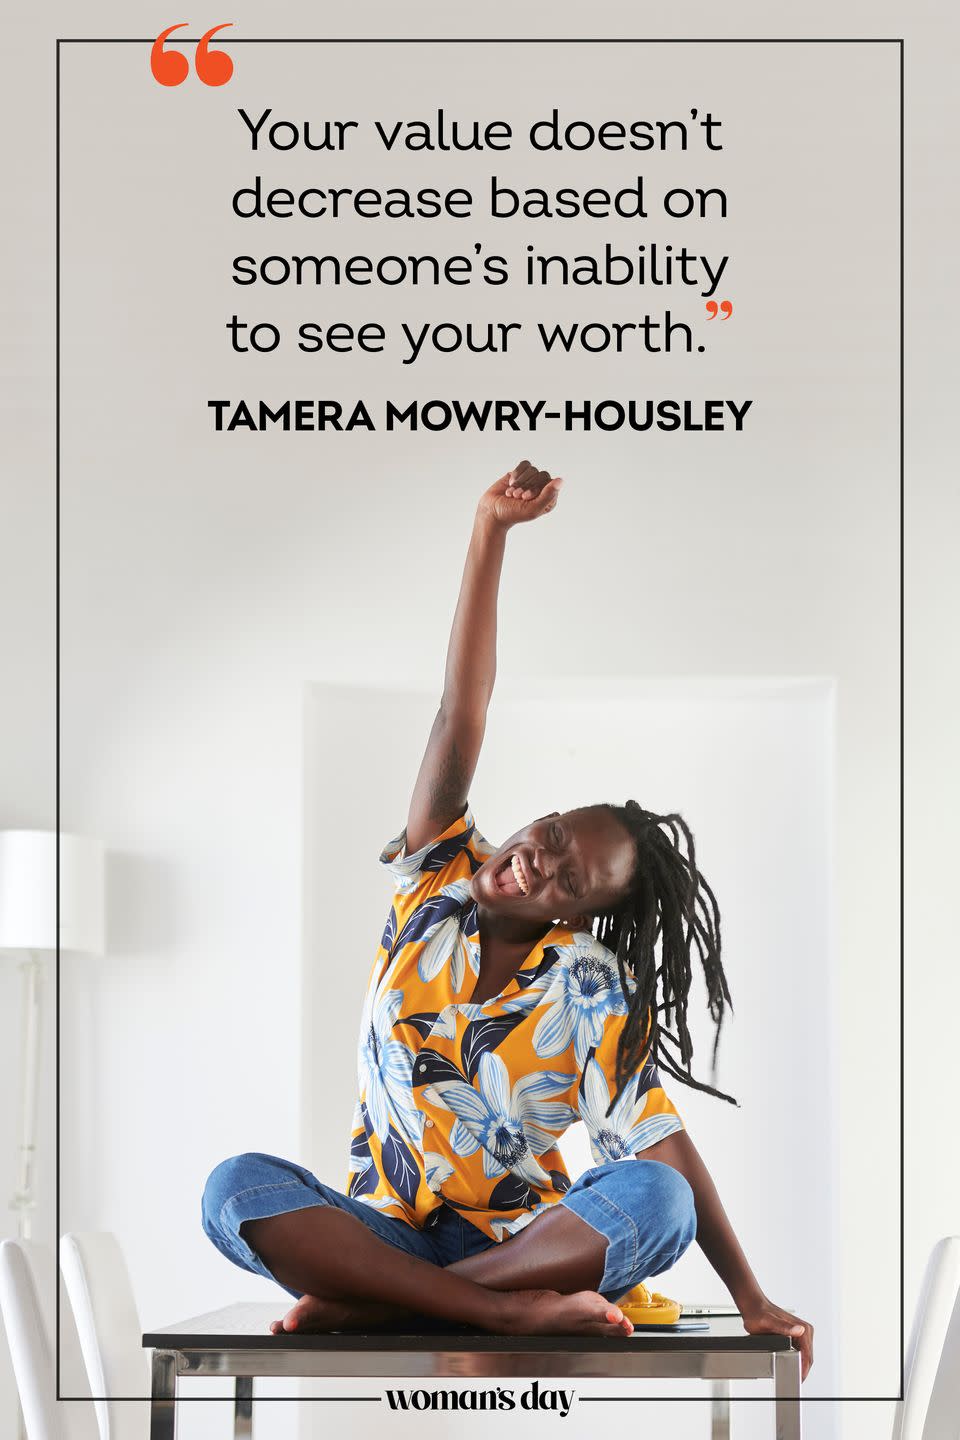 5) Tamera Mowry-Housley